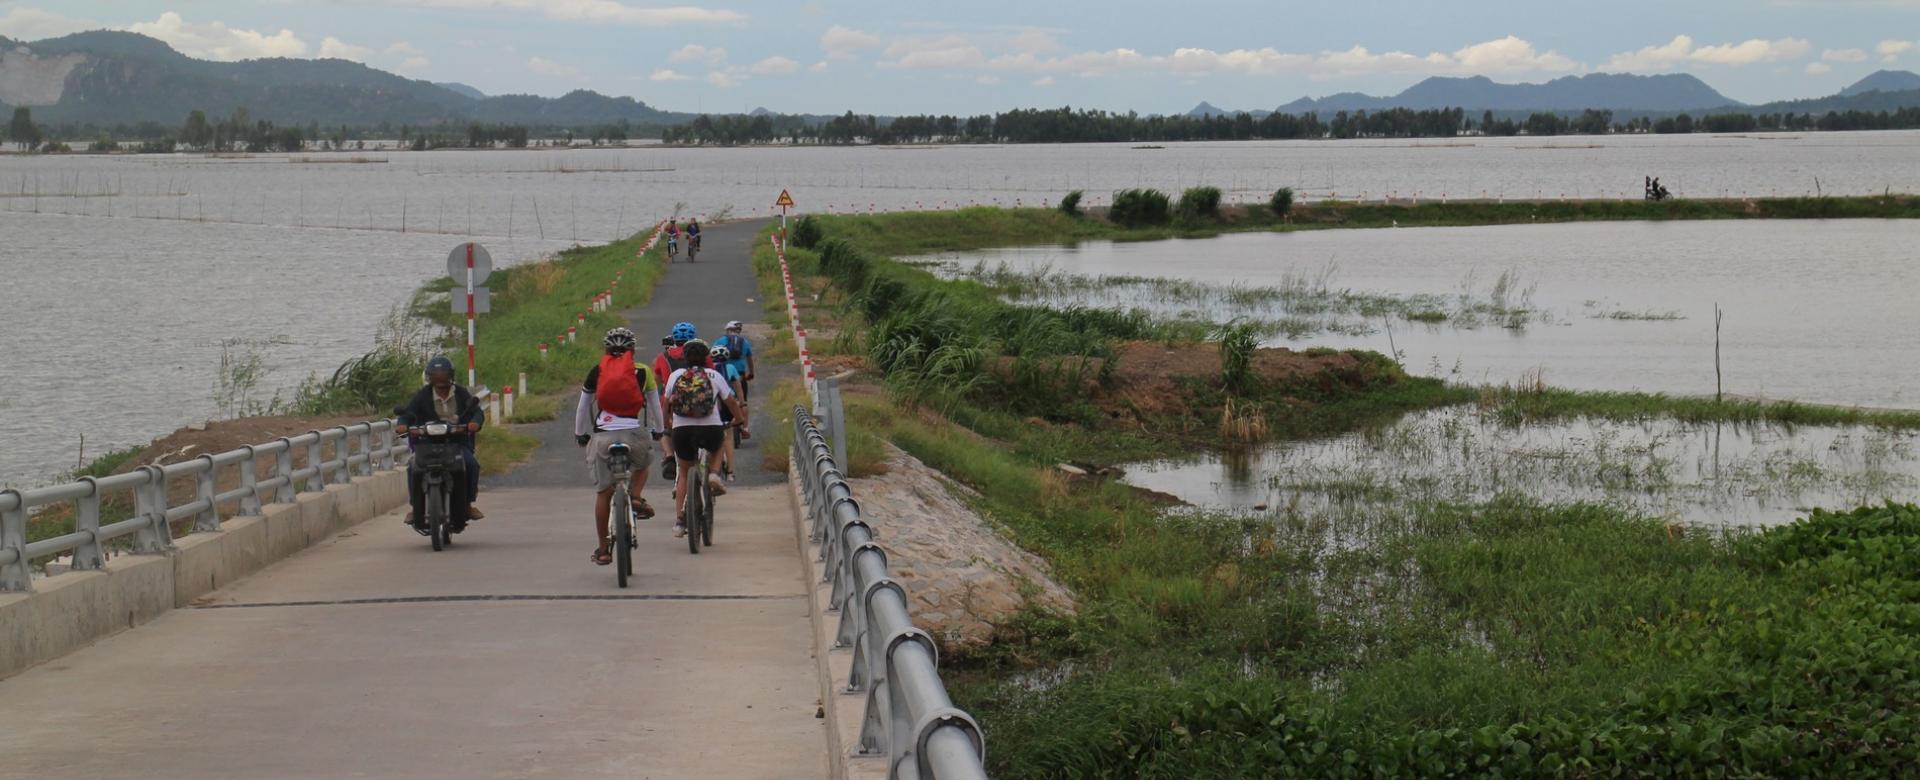 Biking Mekong Delta 4 days/ 3 nights Saigon to Ha Tien